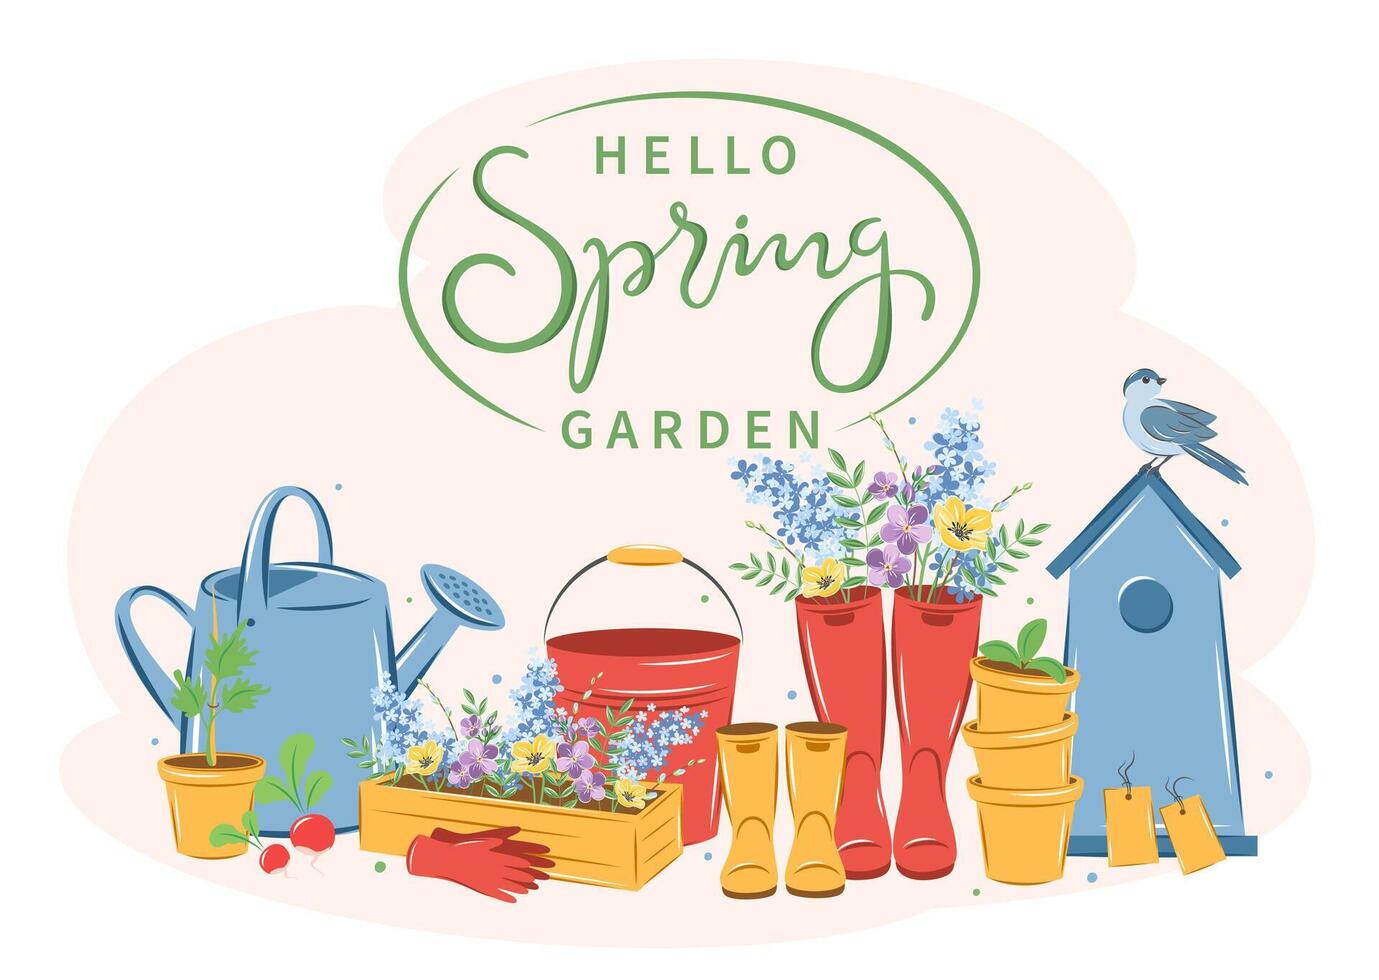 Gardening, growing plants, agricultural tools. Hello spring garden.  Vector illustration.